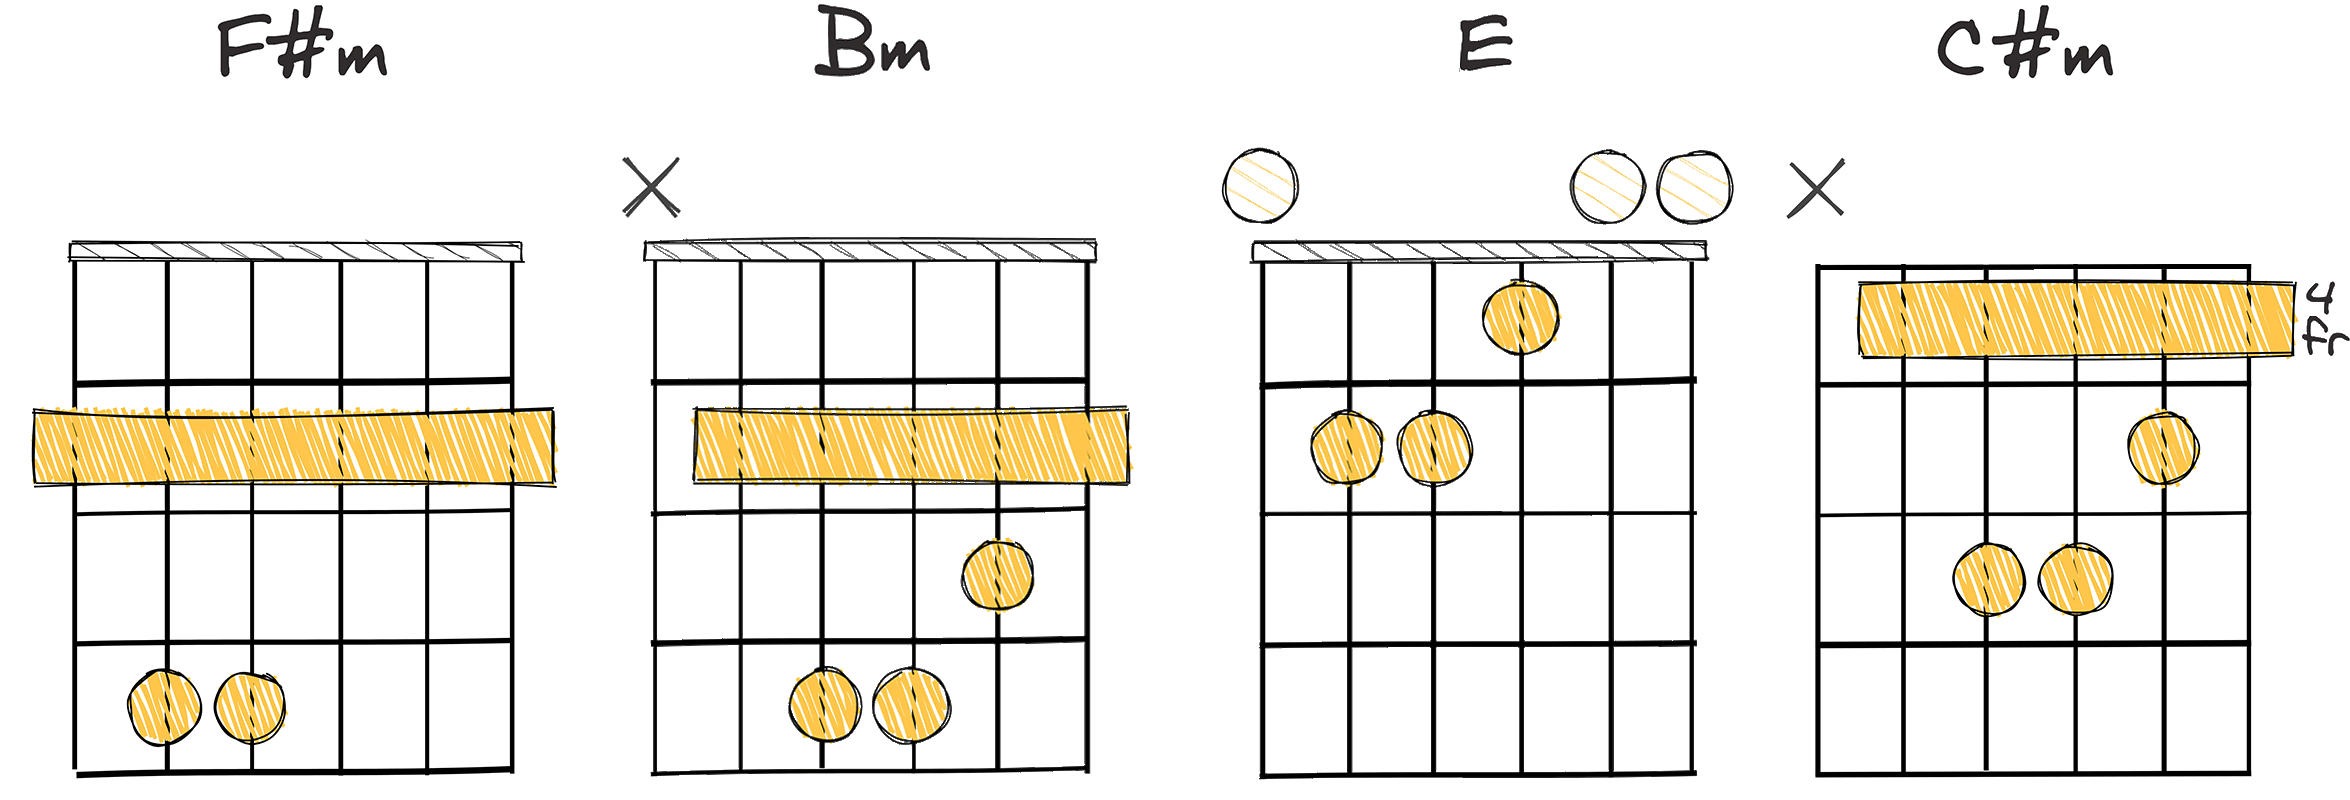 VI-II-V-III (6-2-5-3) chords diagram